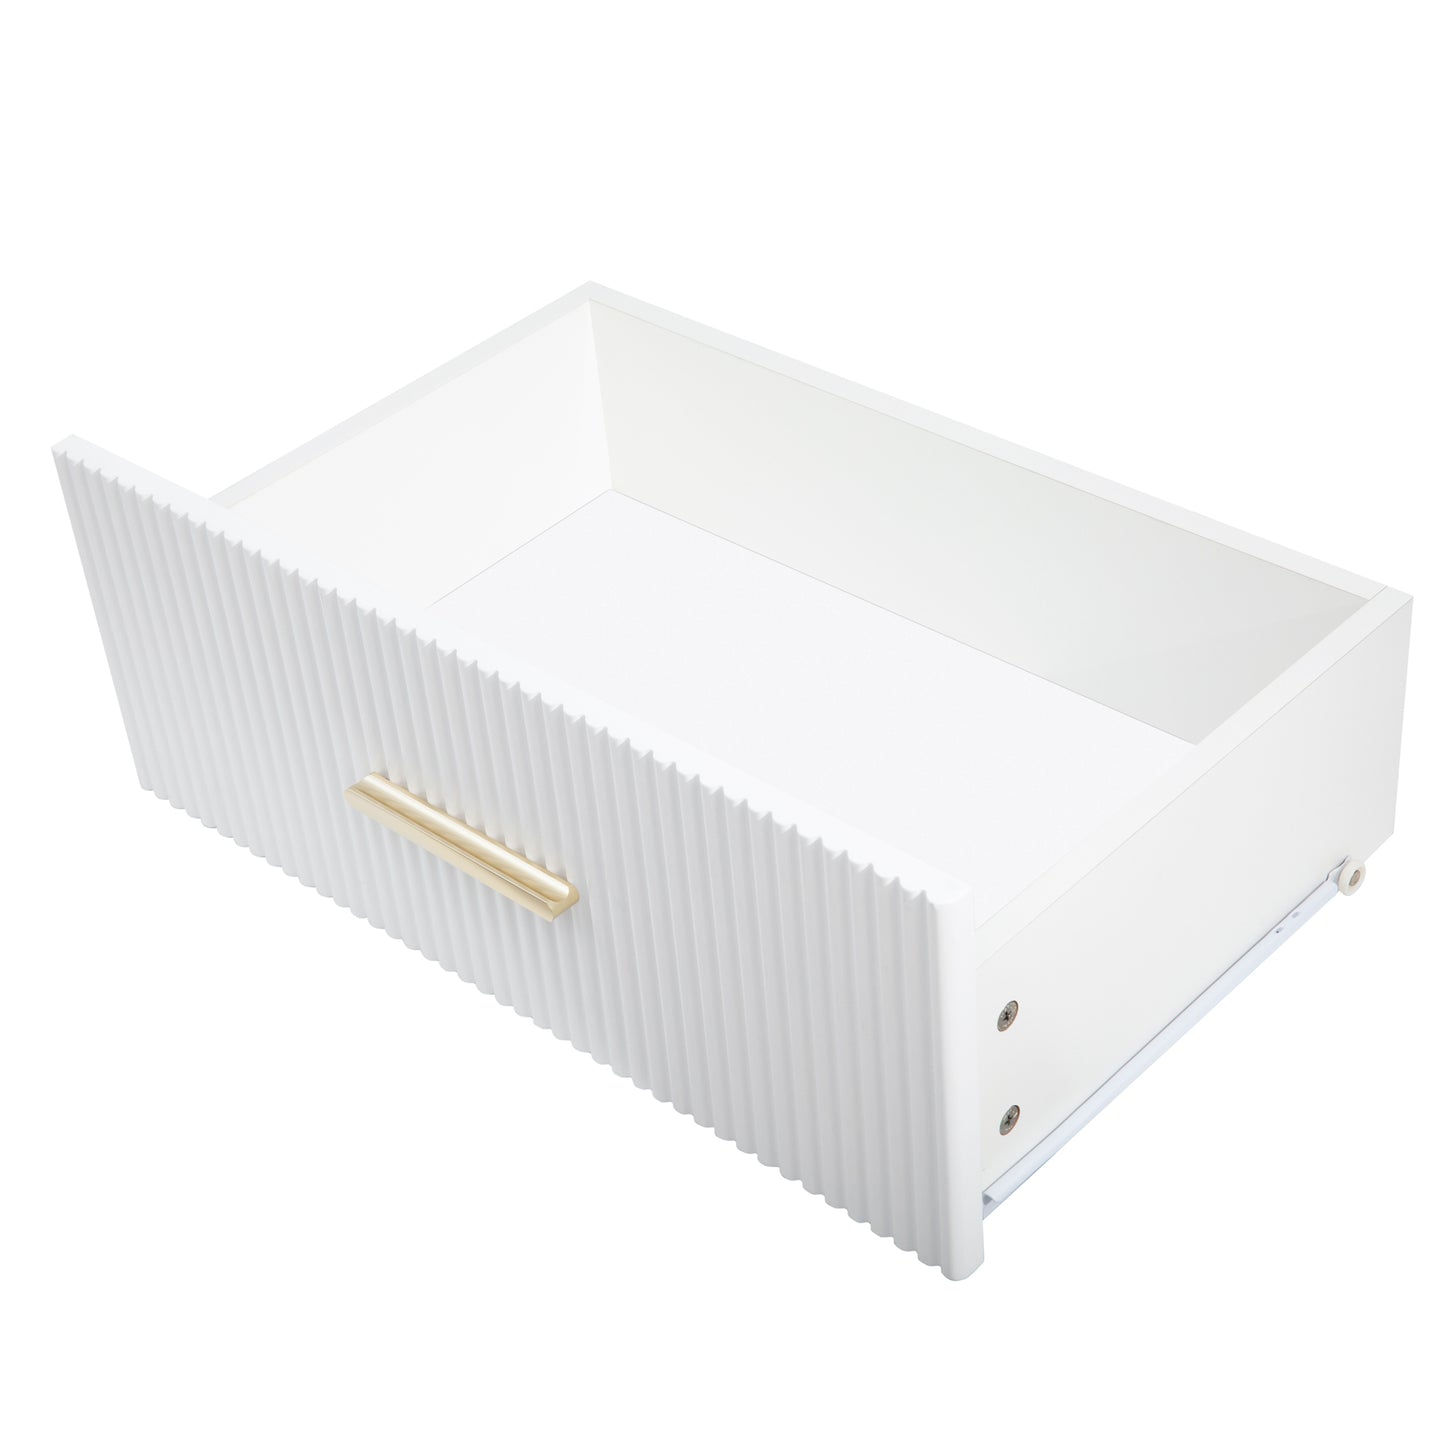 White Modern Sideboard Buffet Cabinet